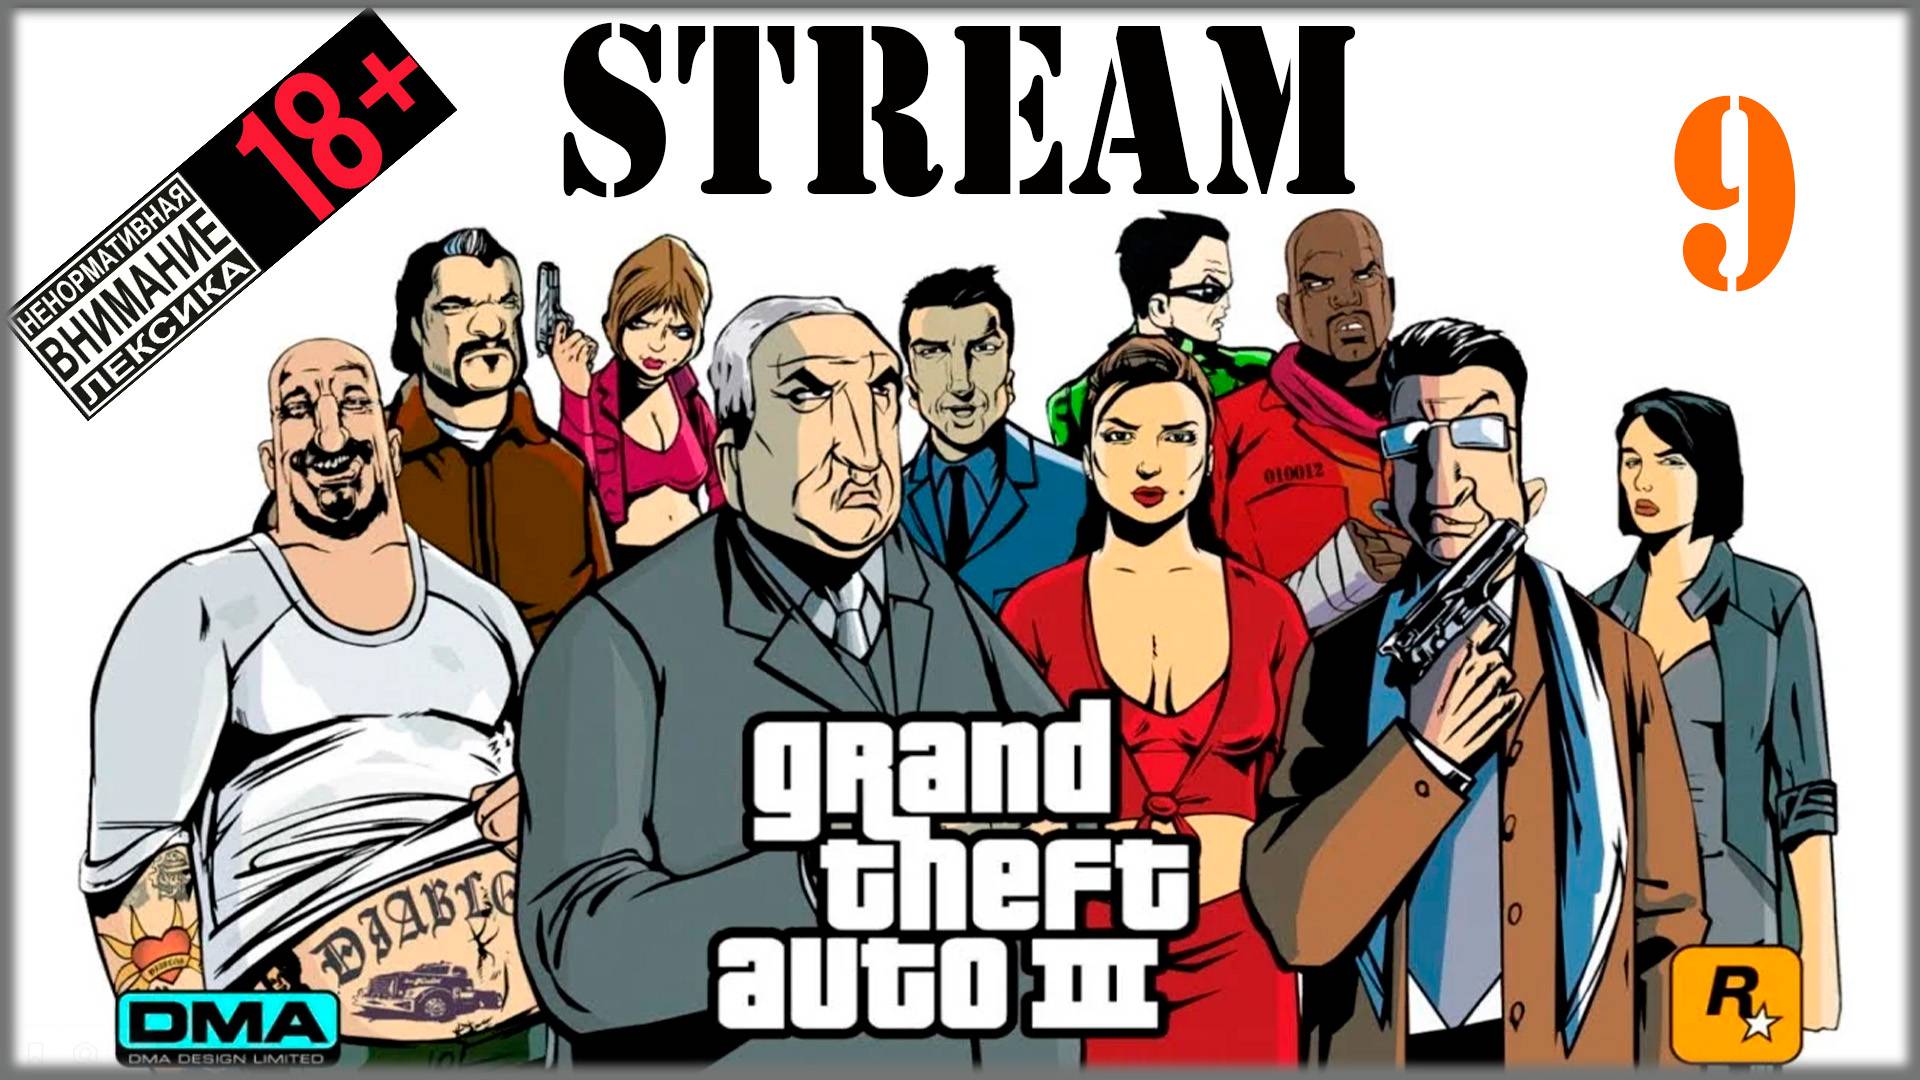 Stream - Grand Theft Auto III: The Definitive Edition #9 Женский вопрос